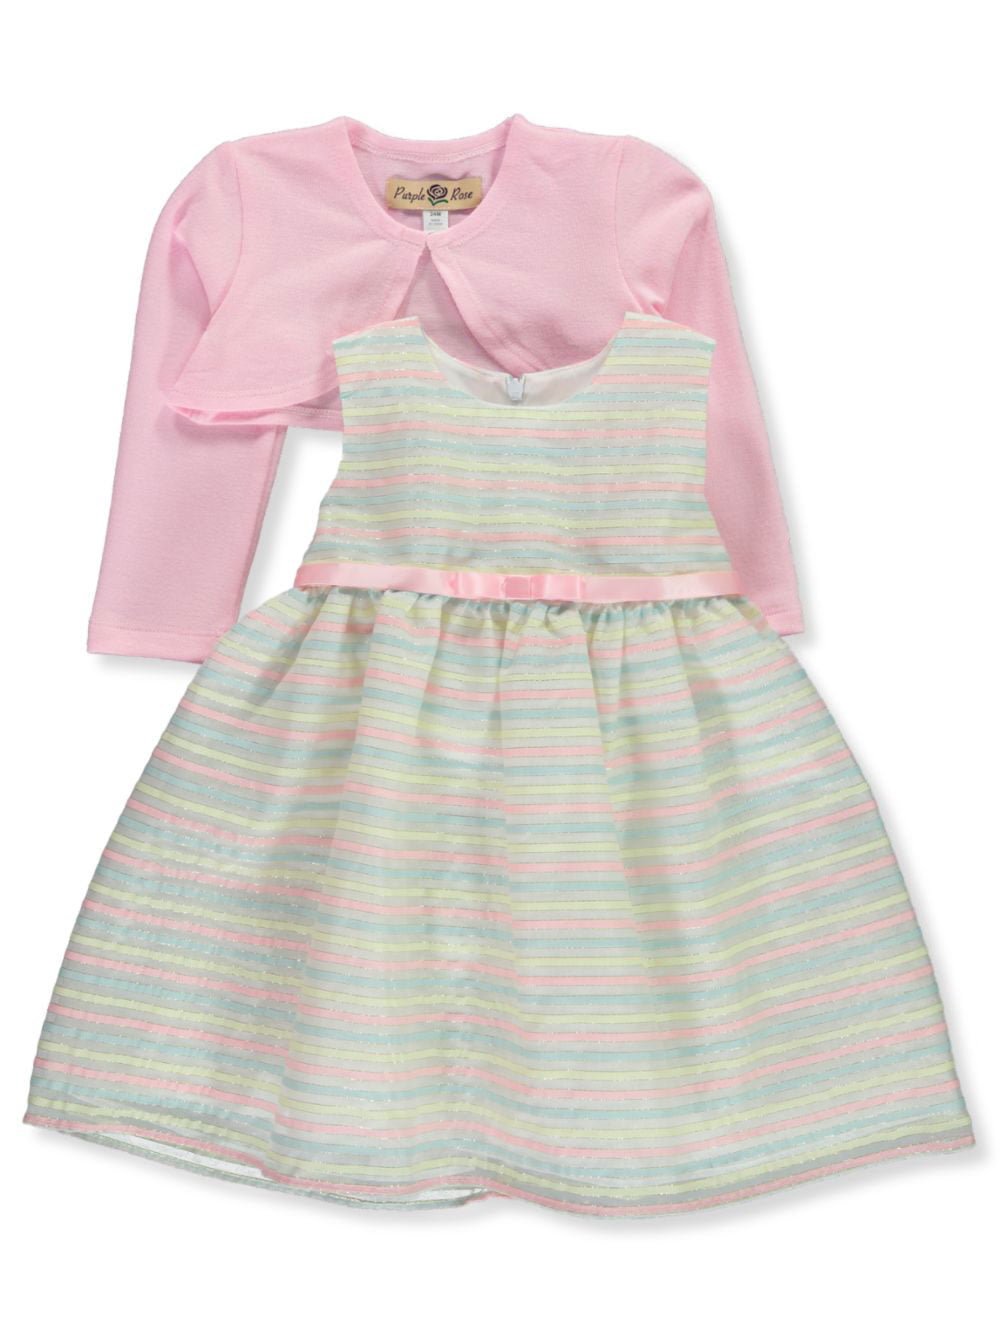 Infant Light Pink Rose Floral Girl Bodysuit Pink Pettiskirt Baby Dress NB-18M 